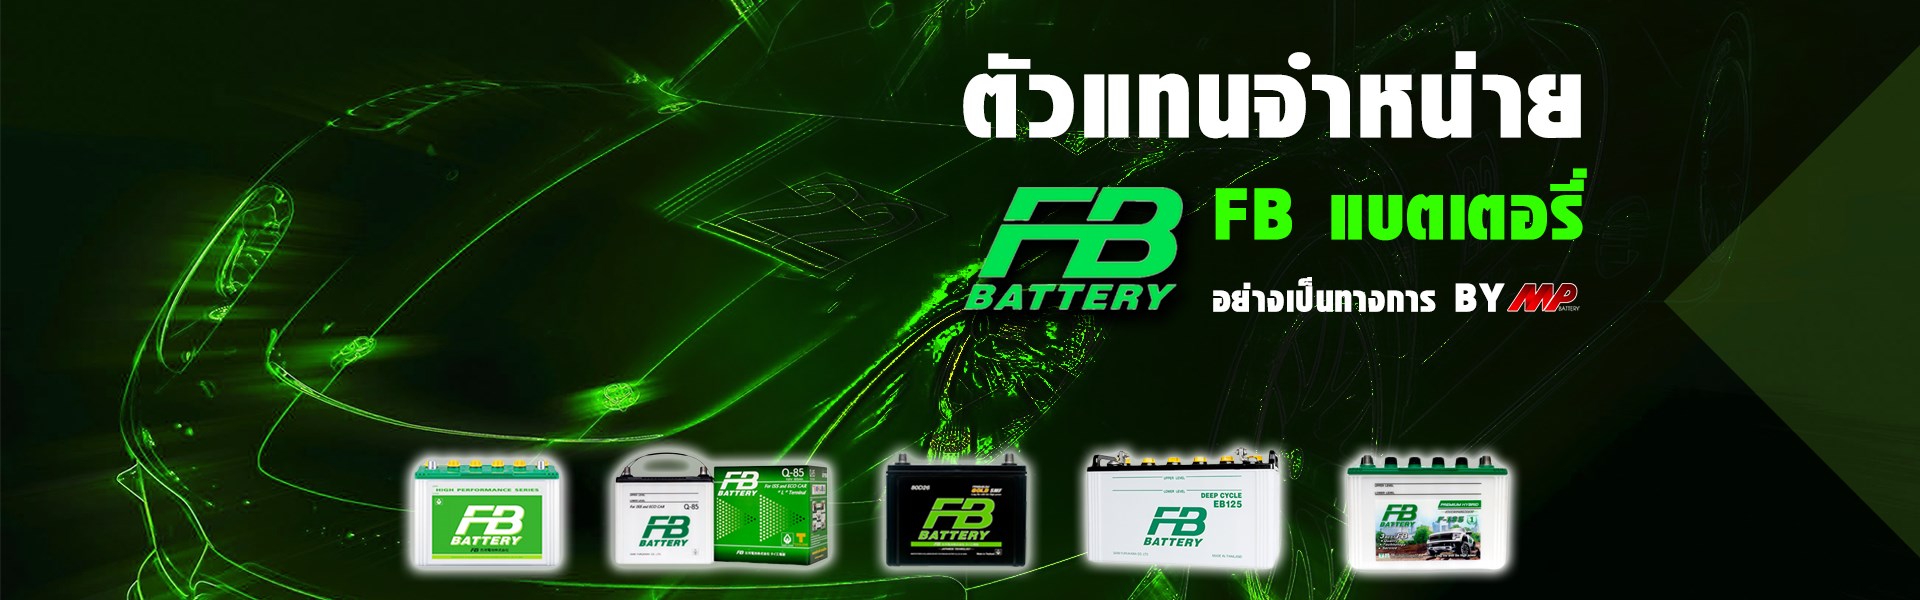 fb battery